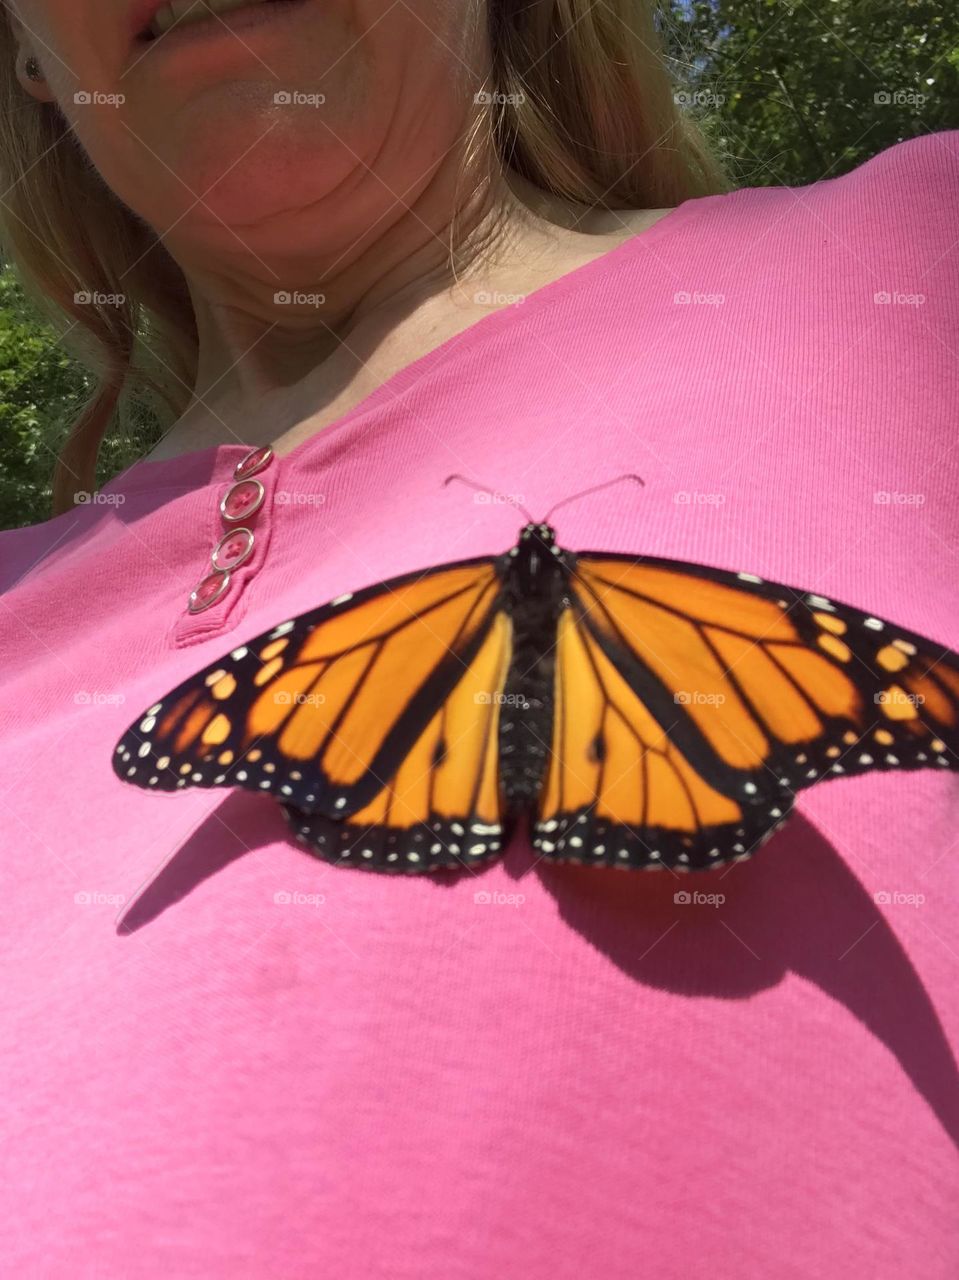 Monarch butterfly landing in a woman’s pink shirt 